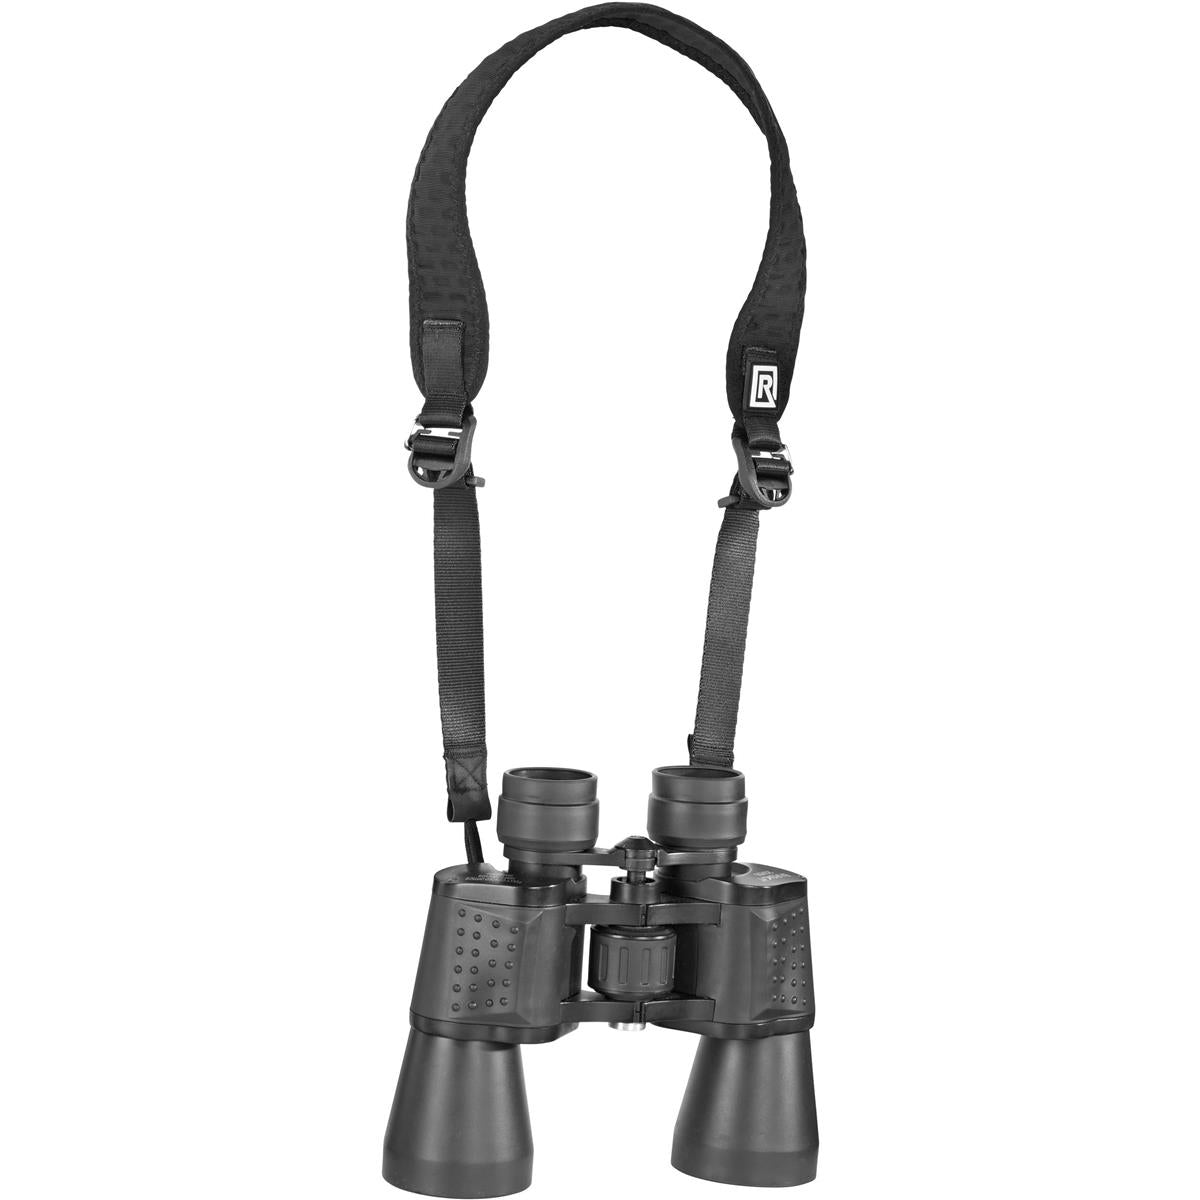 BlackRapid Binocular Neckstrap And Adapter